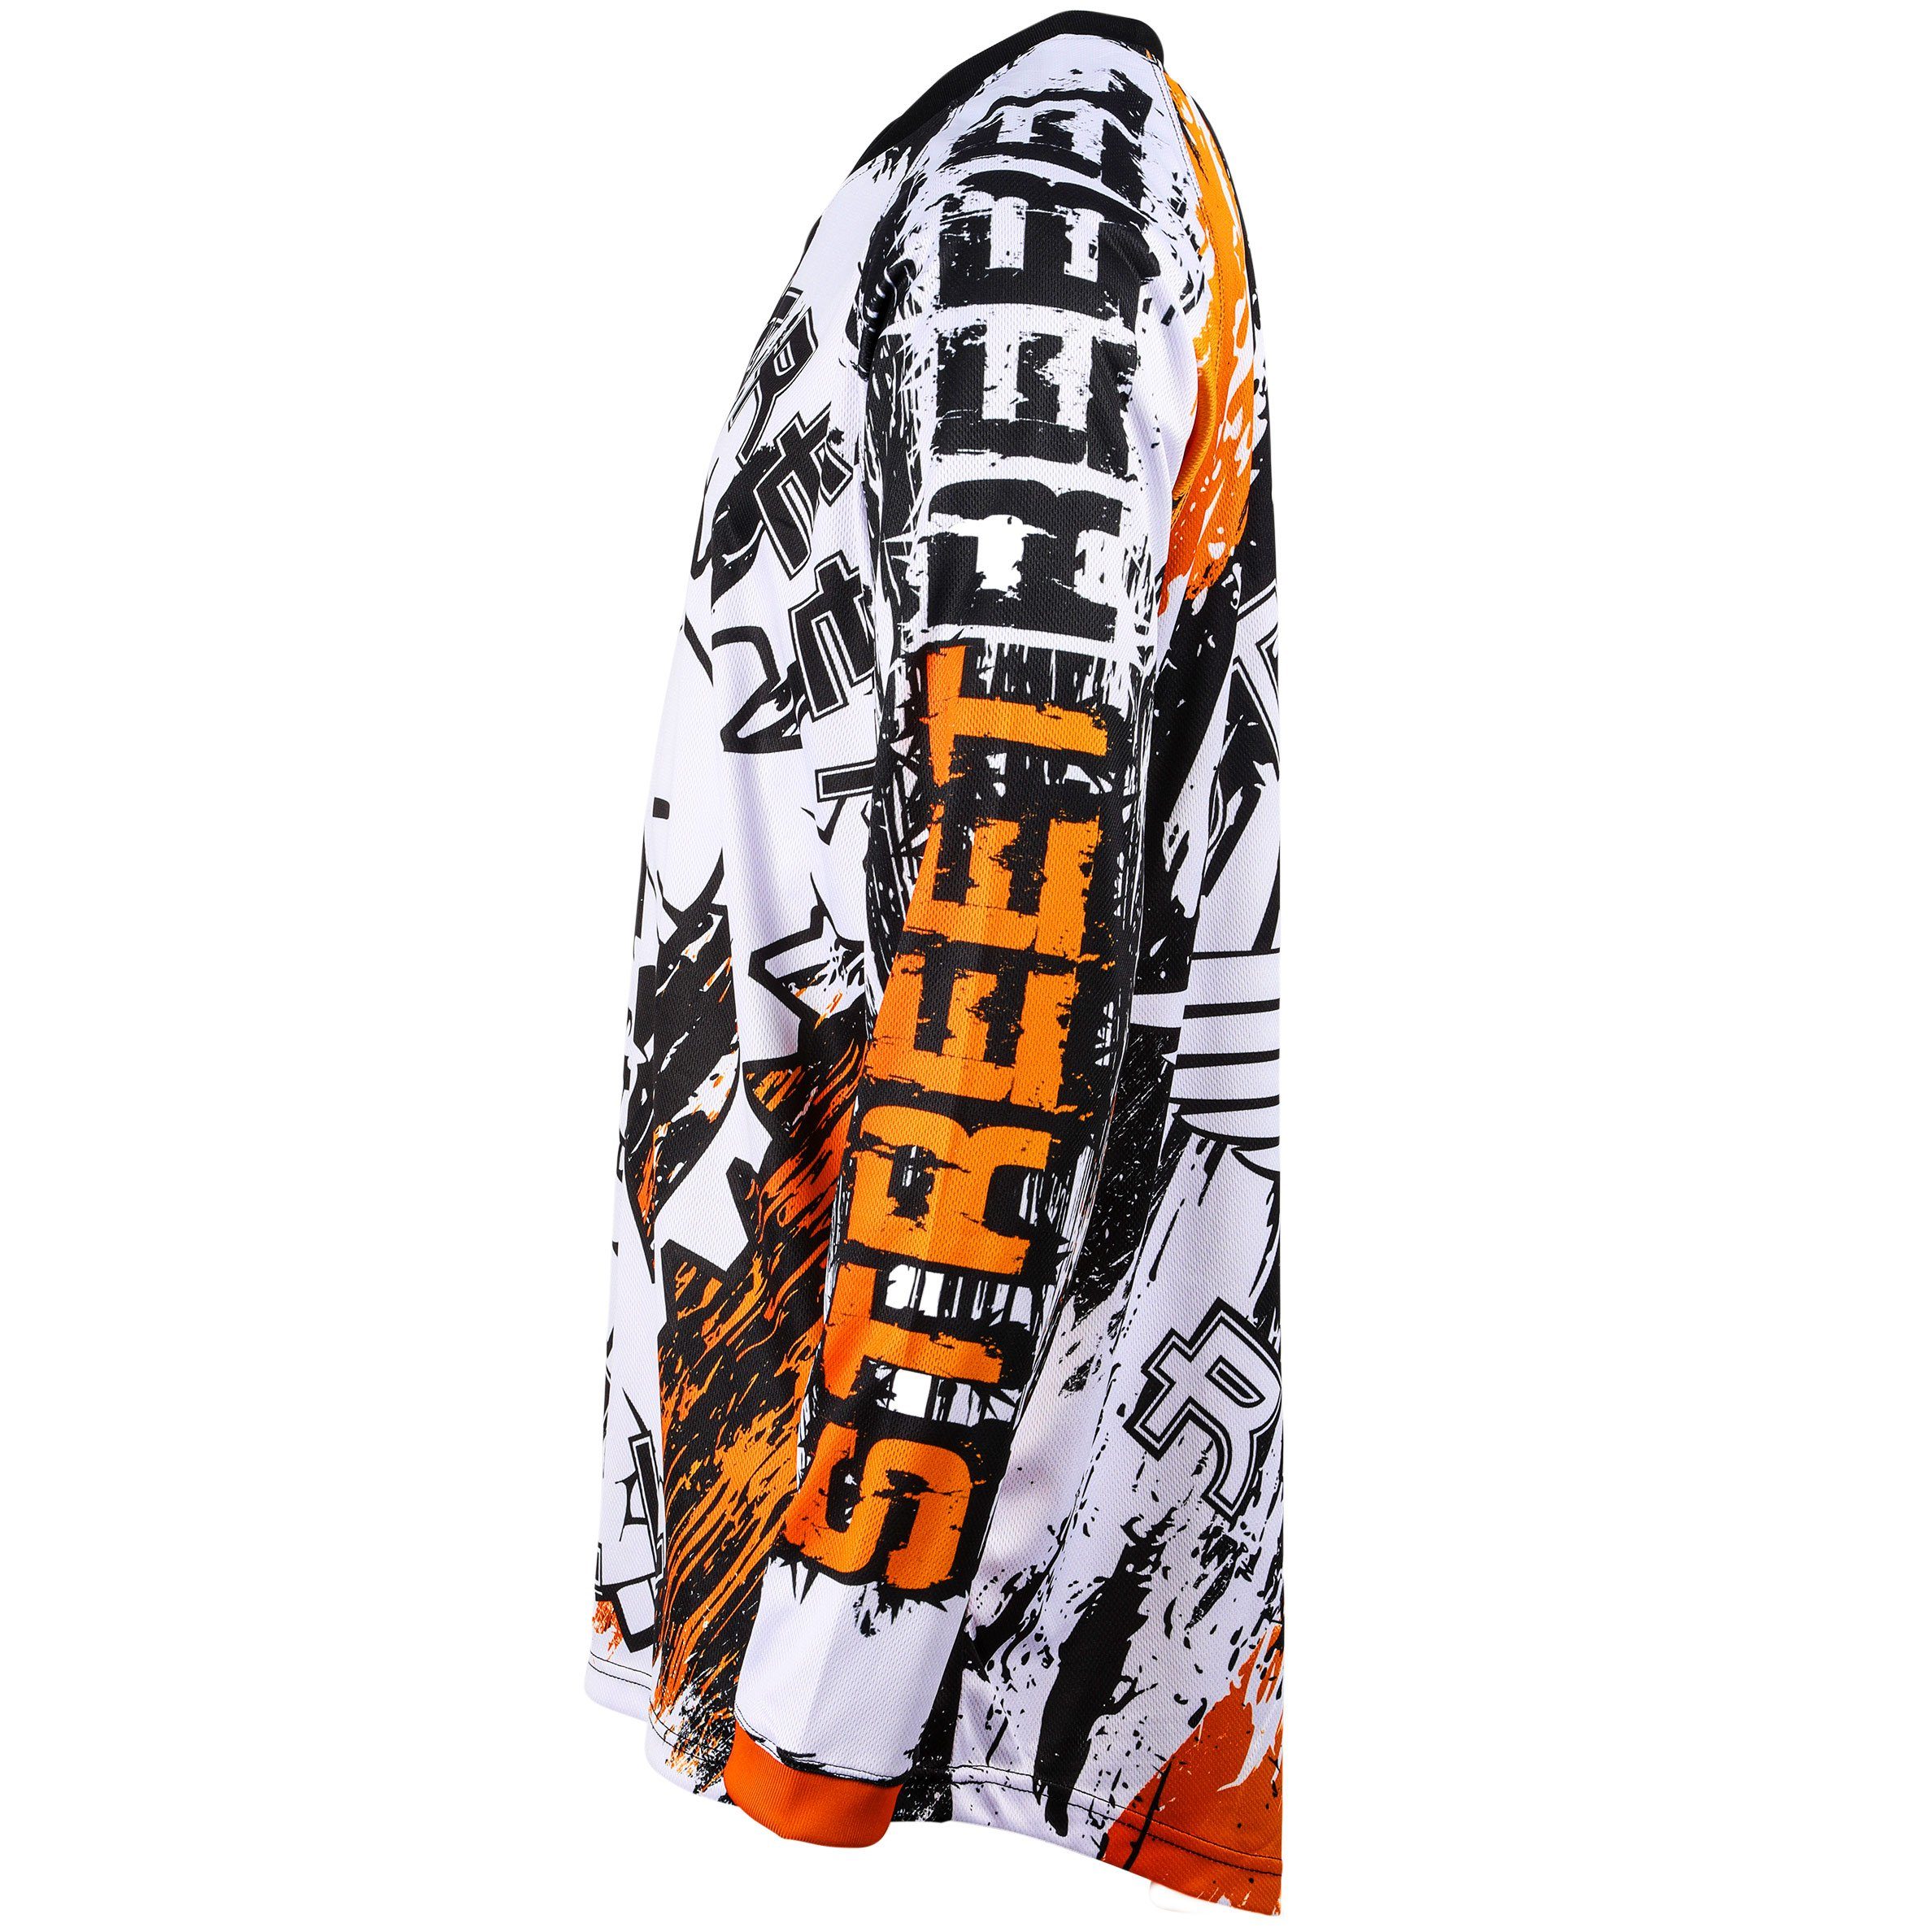 Jersey Print Funktionsshirt Broken mit MX Head Rebel Street Orange